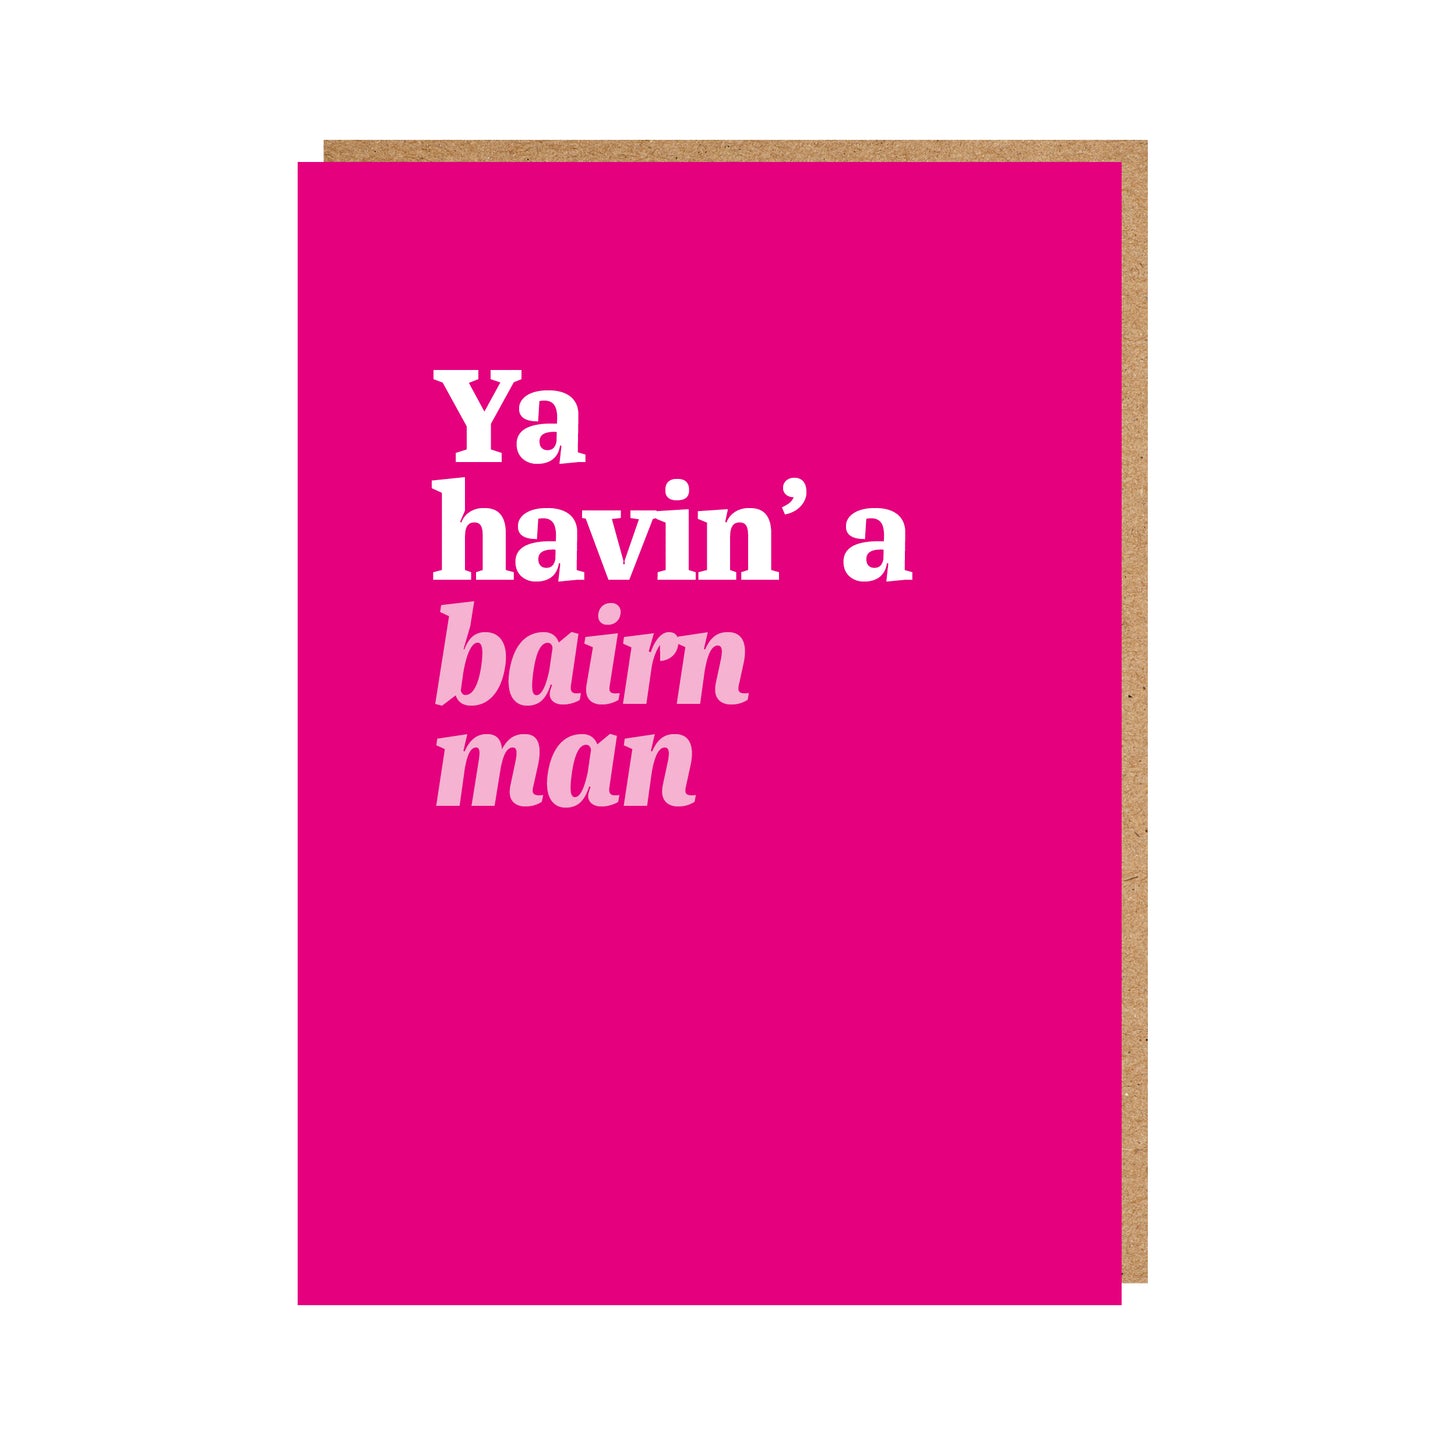 Geordie Pregnancy Card with text that reads "Ya havin' a bairn man"